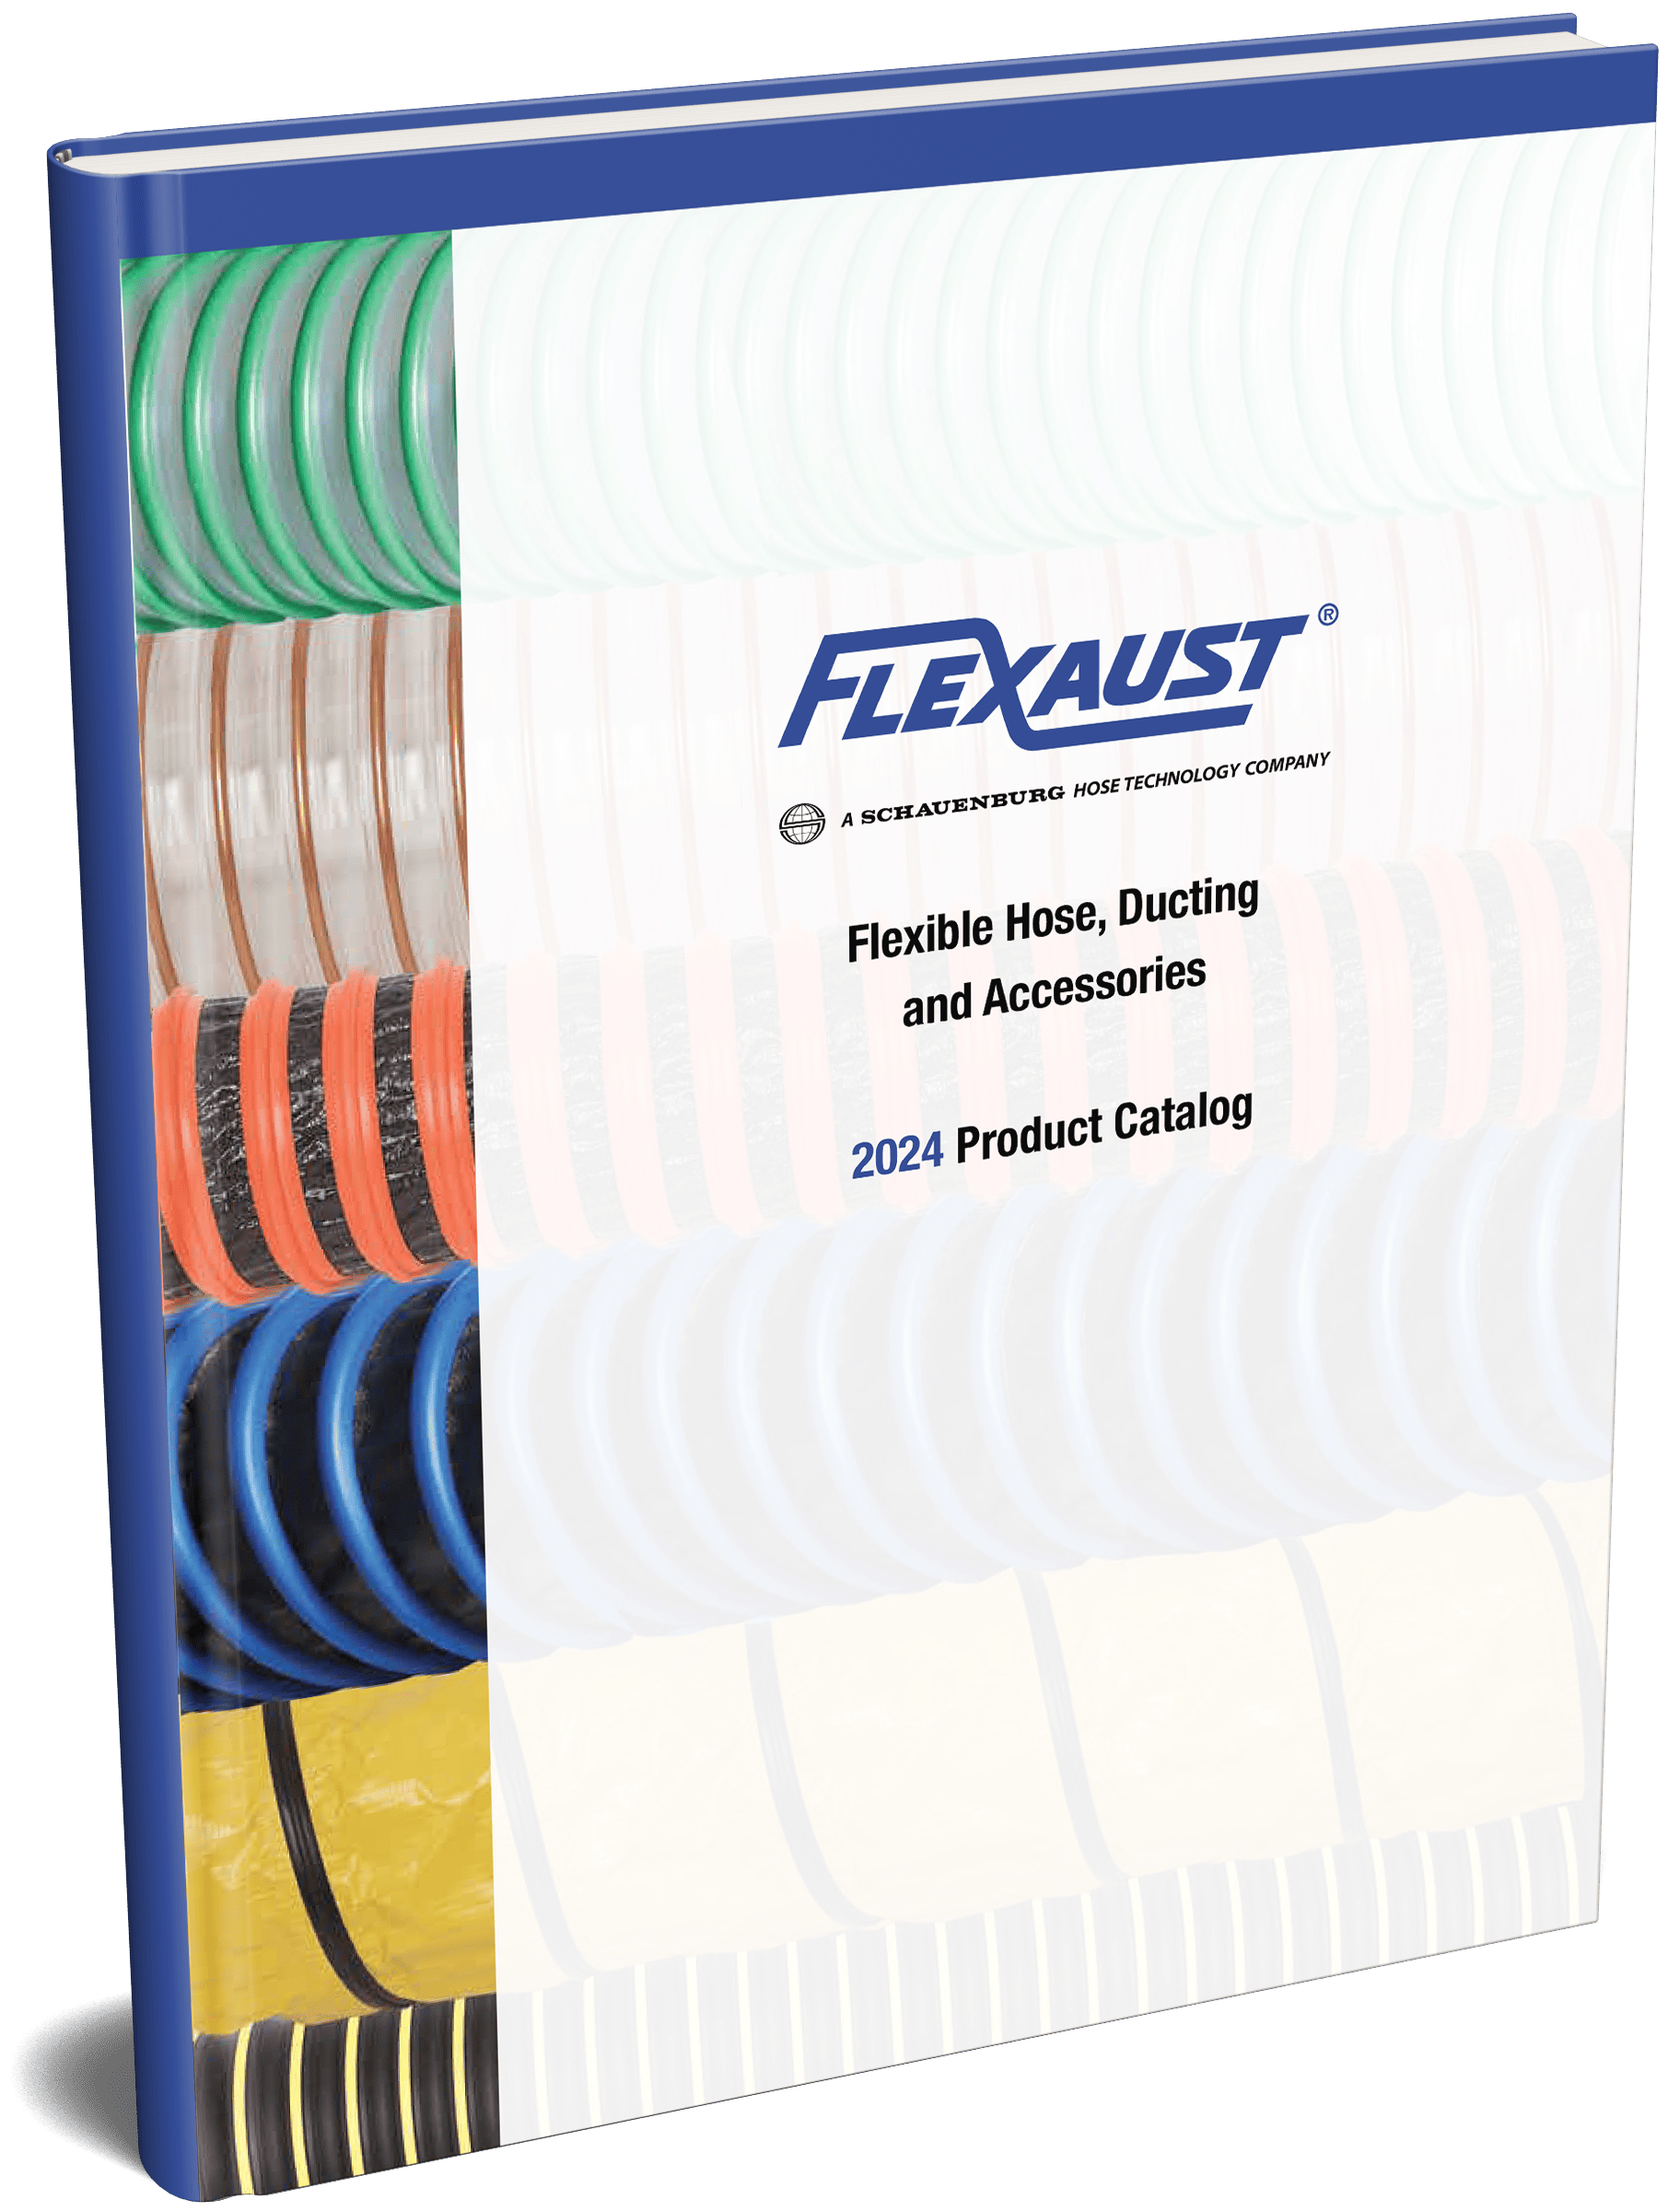 Flexaust 2024 Catalog